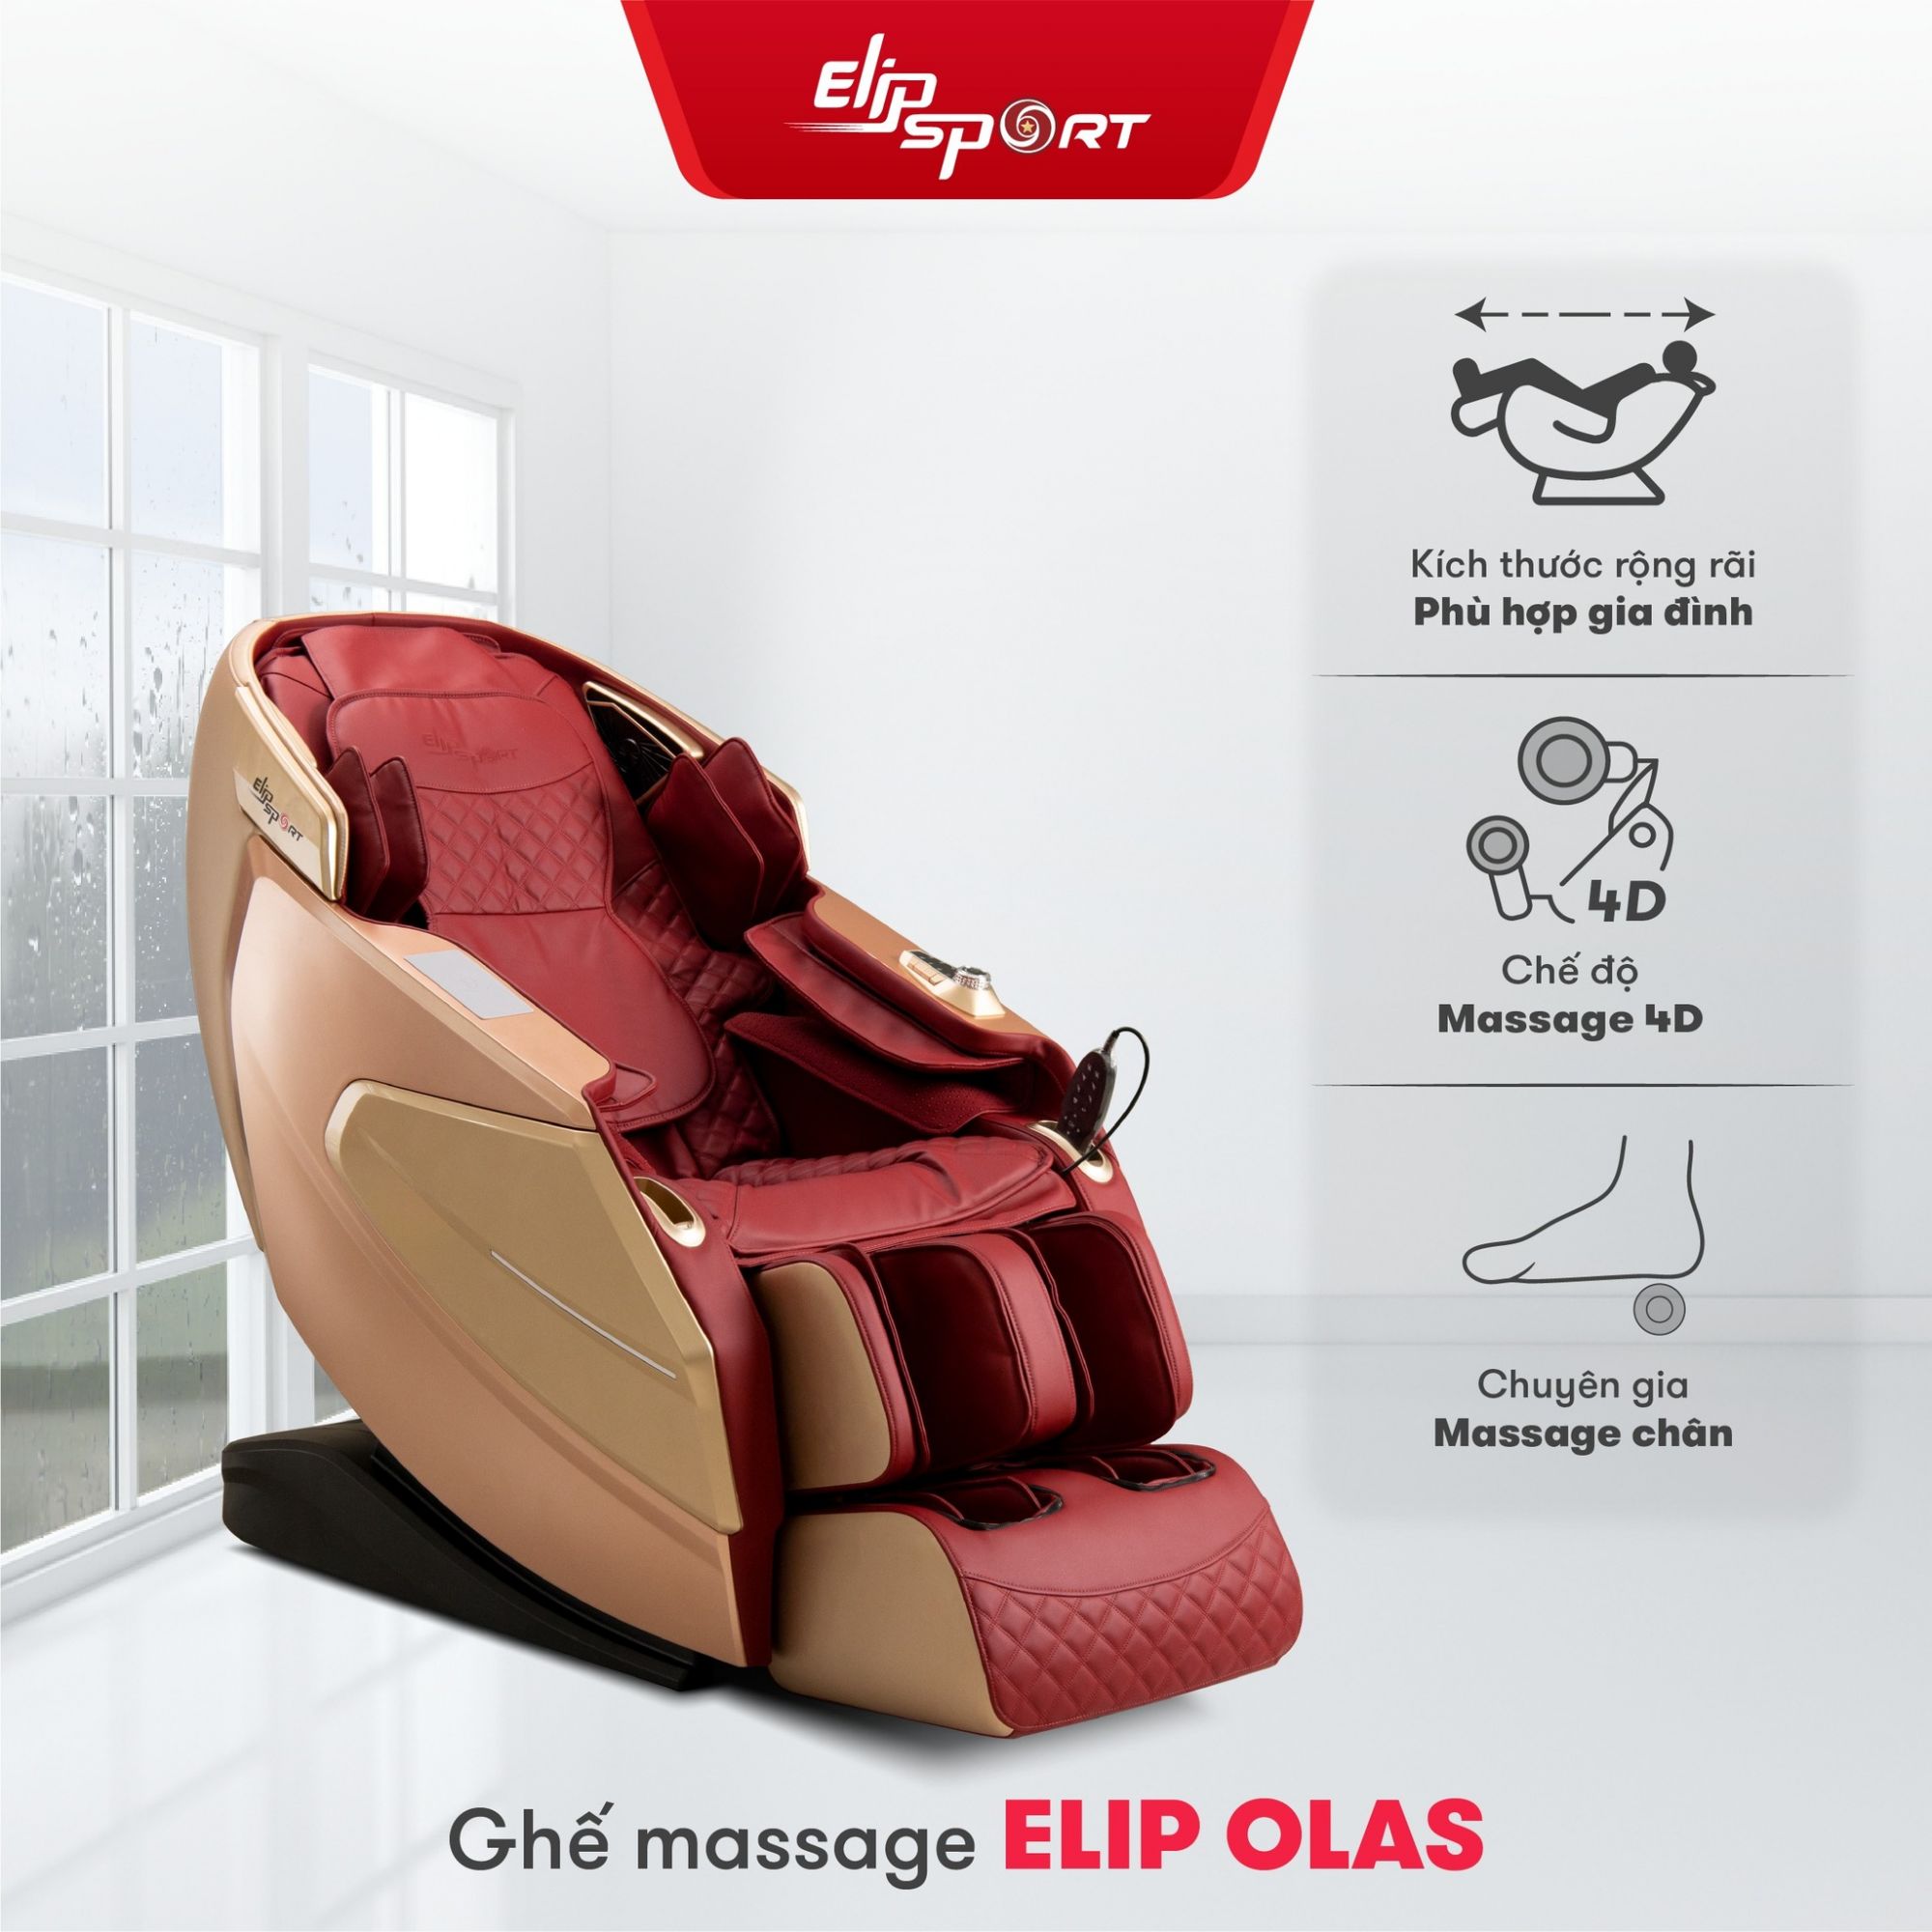  Ghế massage ELIP olas